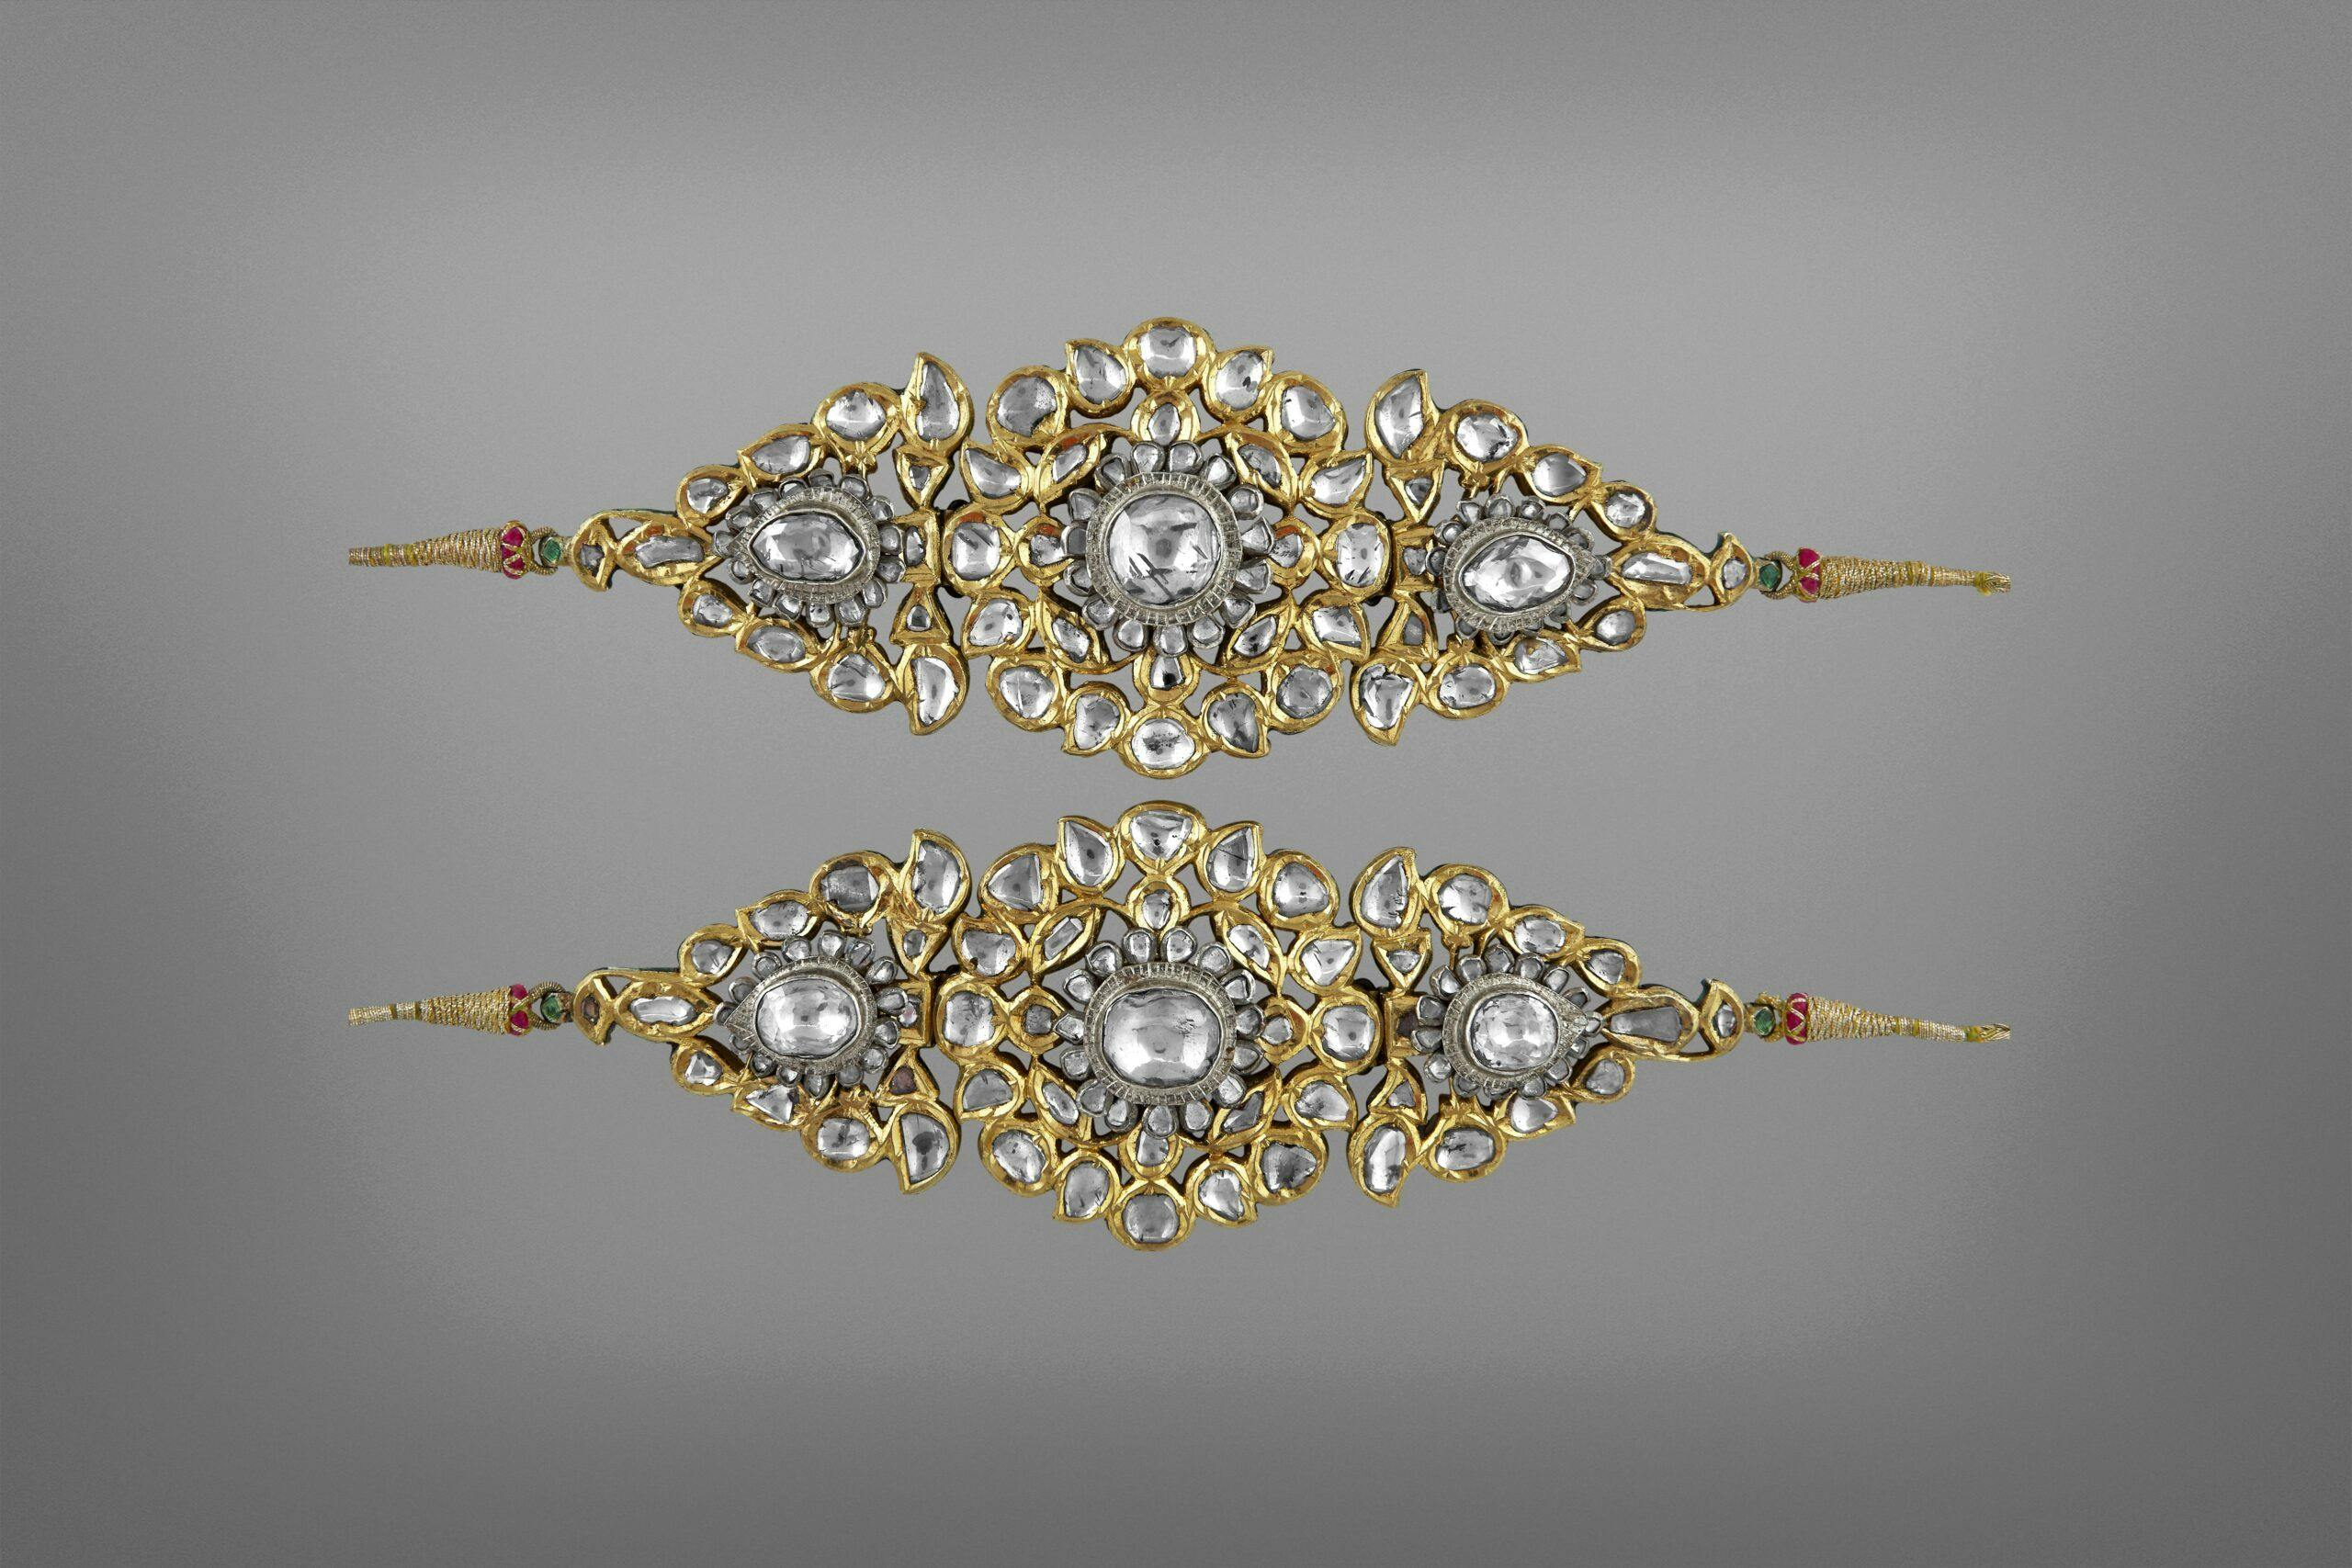 Bazuband (armbands), Deccan, 19th century 